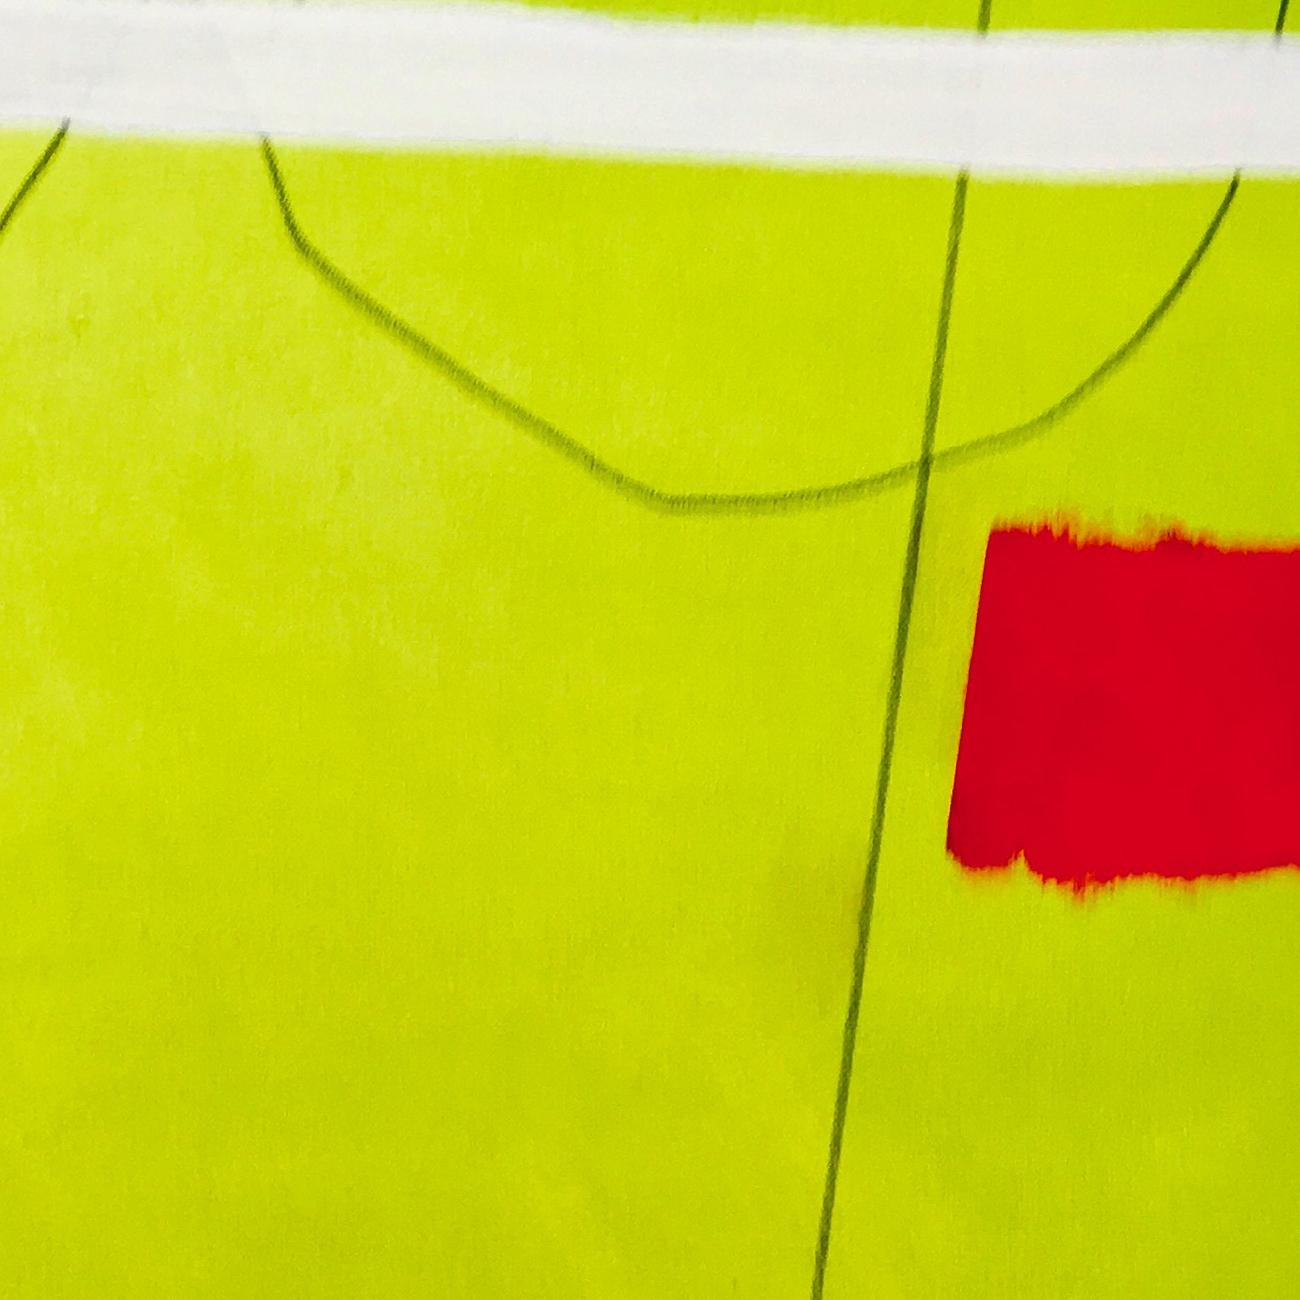 Interior (Abstract painting) - Yellow Abstract Painting by Xanda McCagg